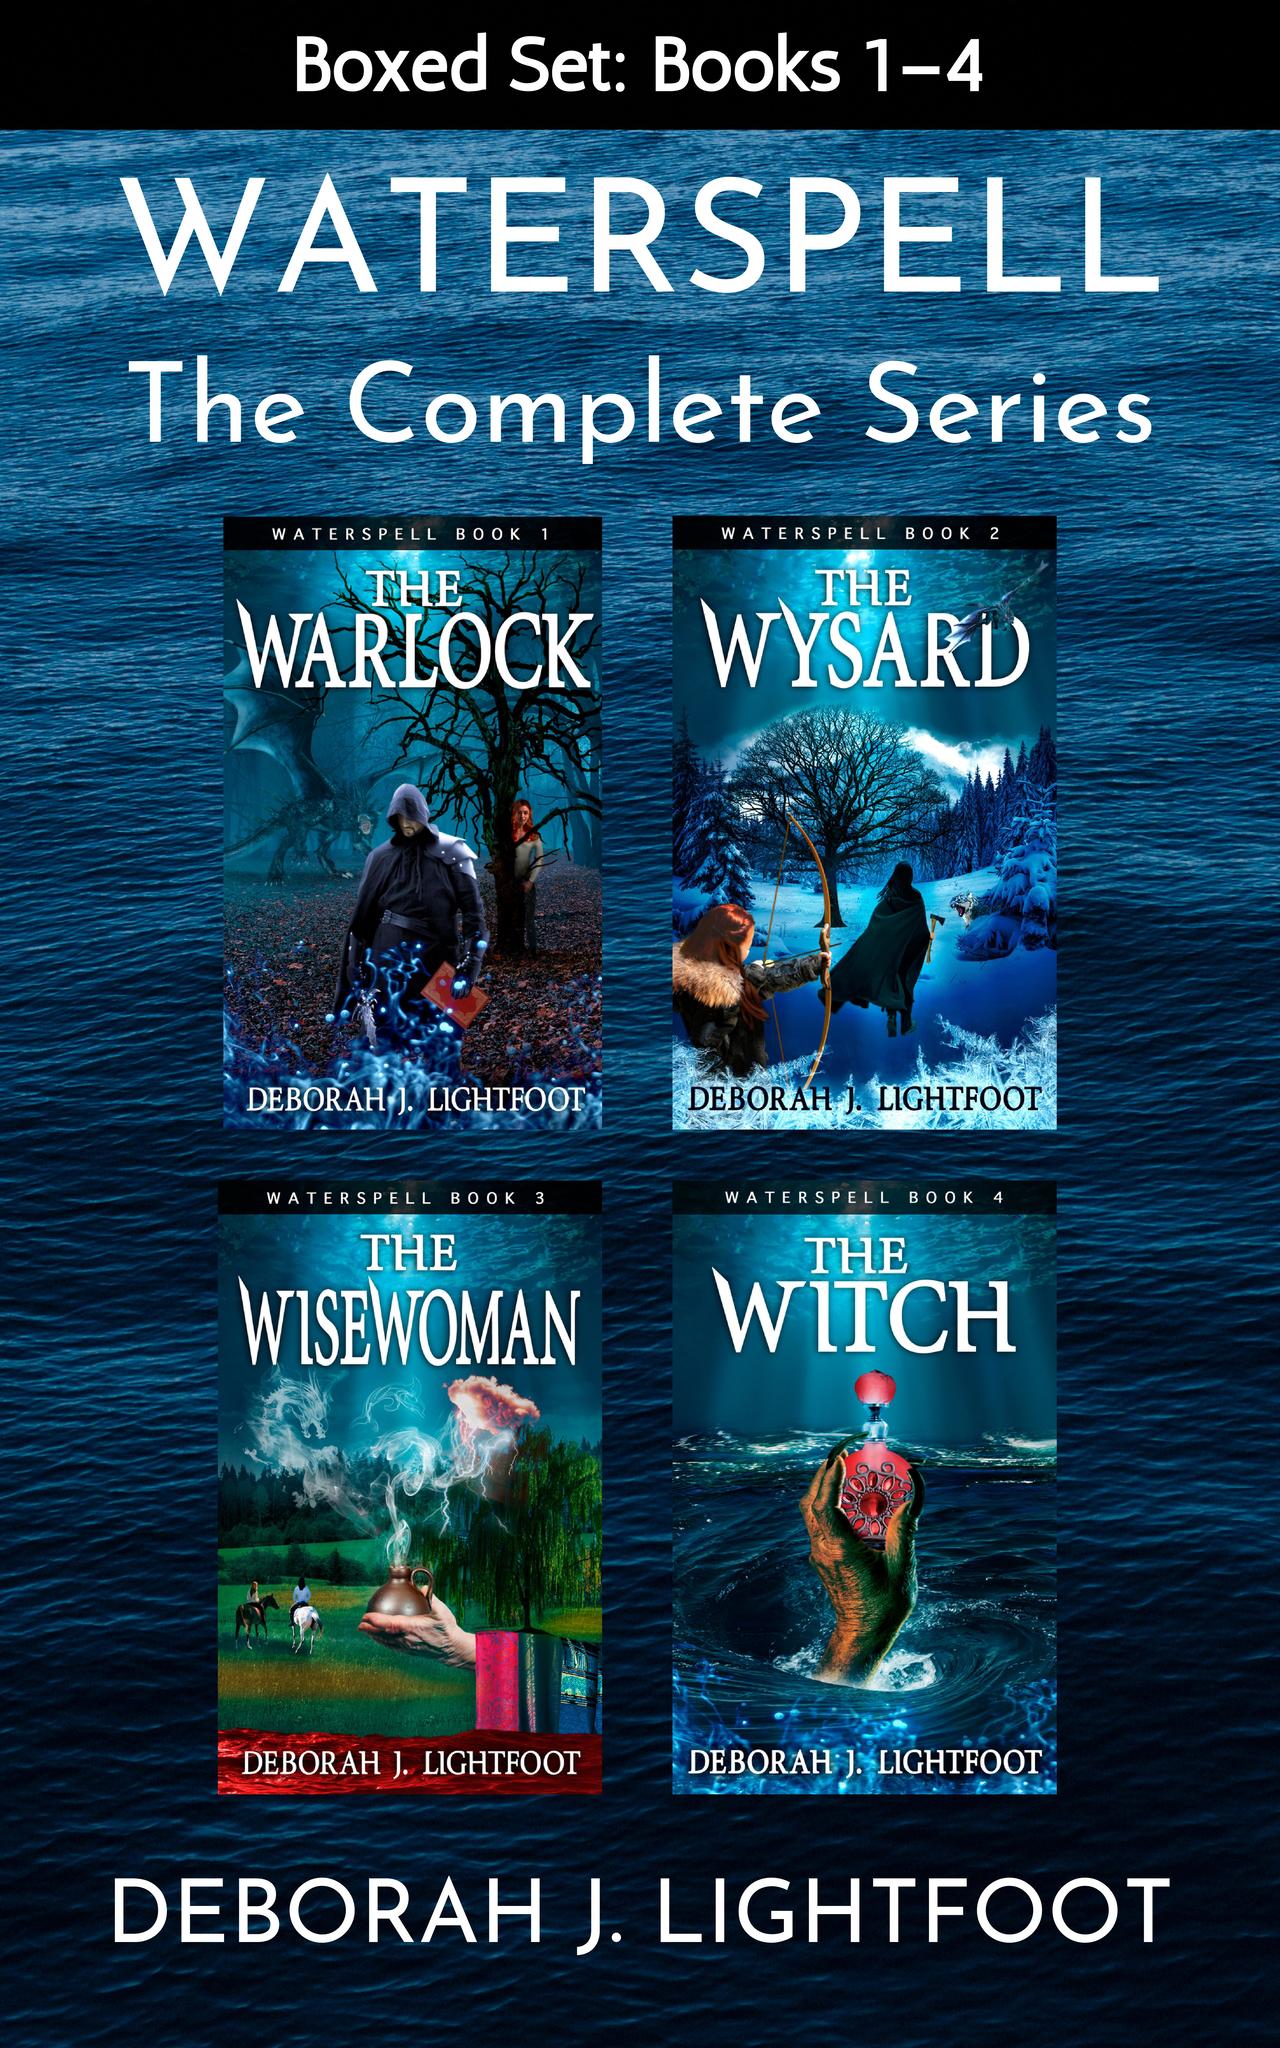 Waterspell: The Complete Series by Deborah J. Lightfoot (Boxed Set: Books 1-4)